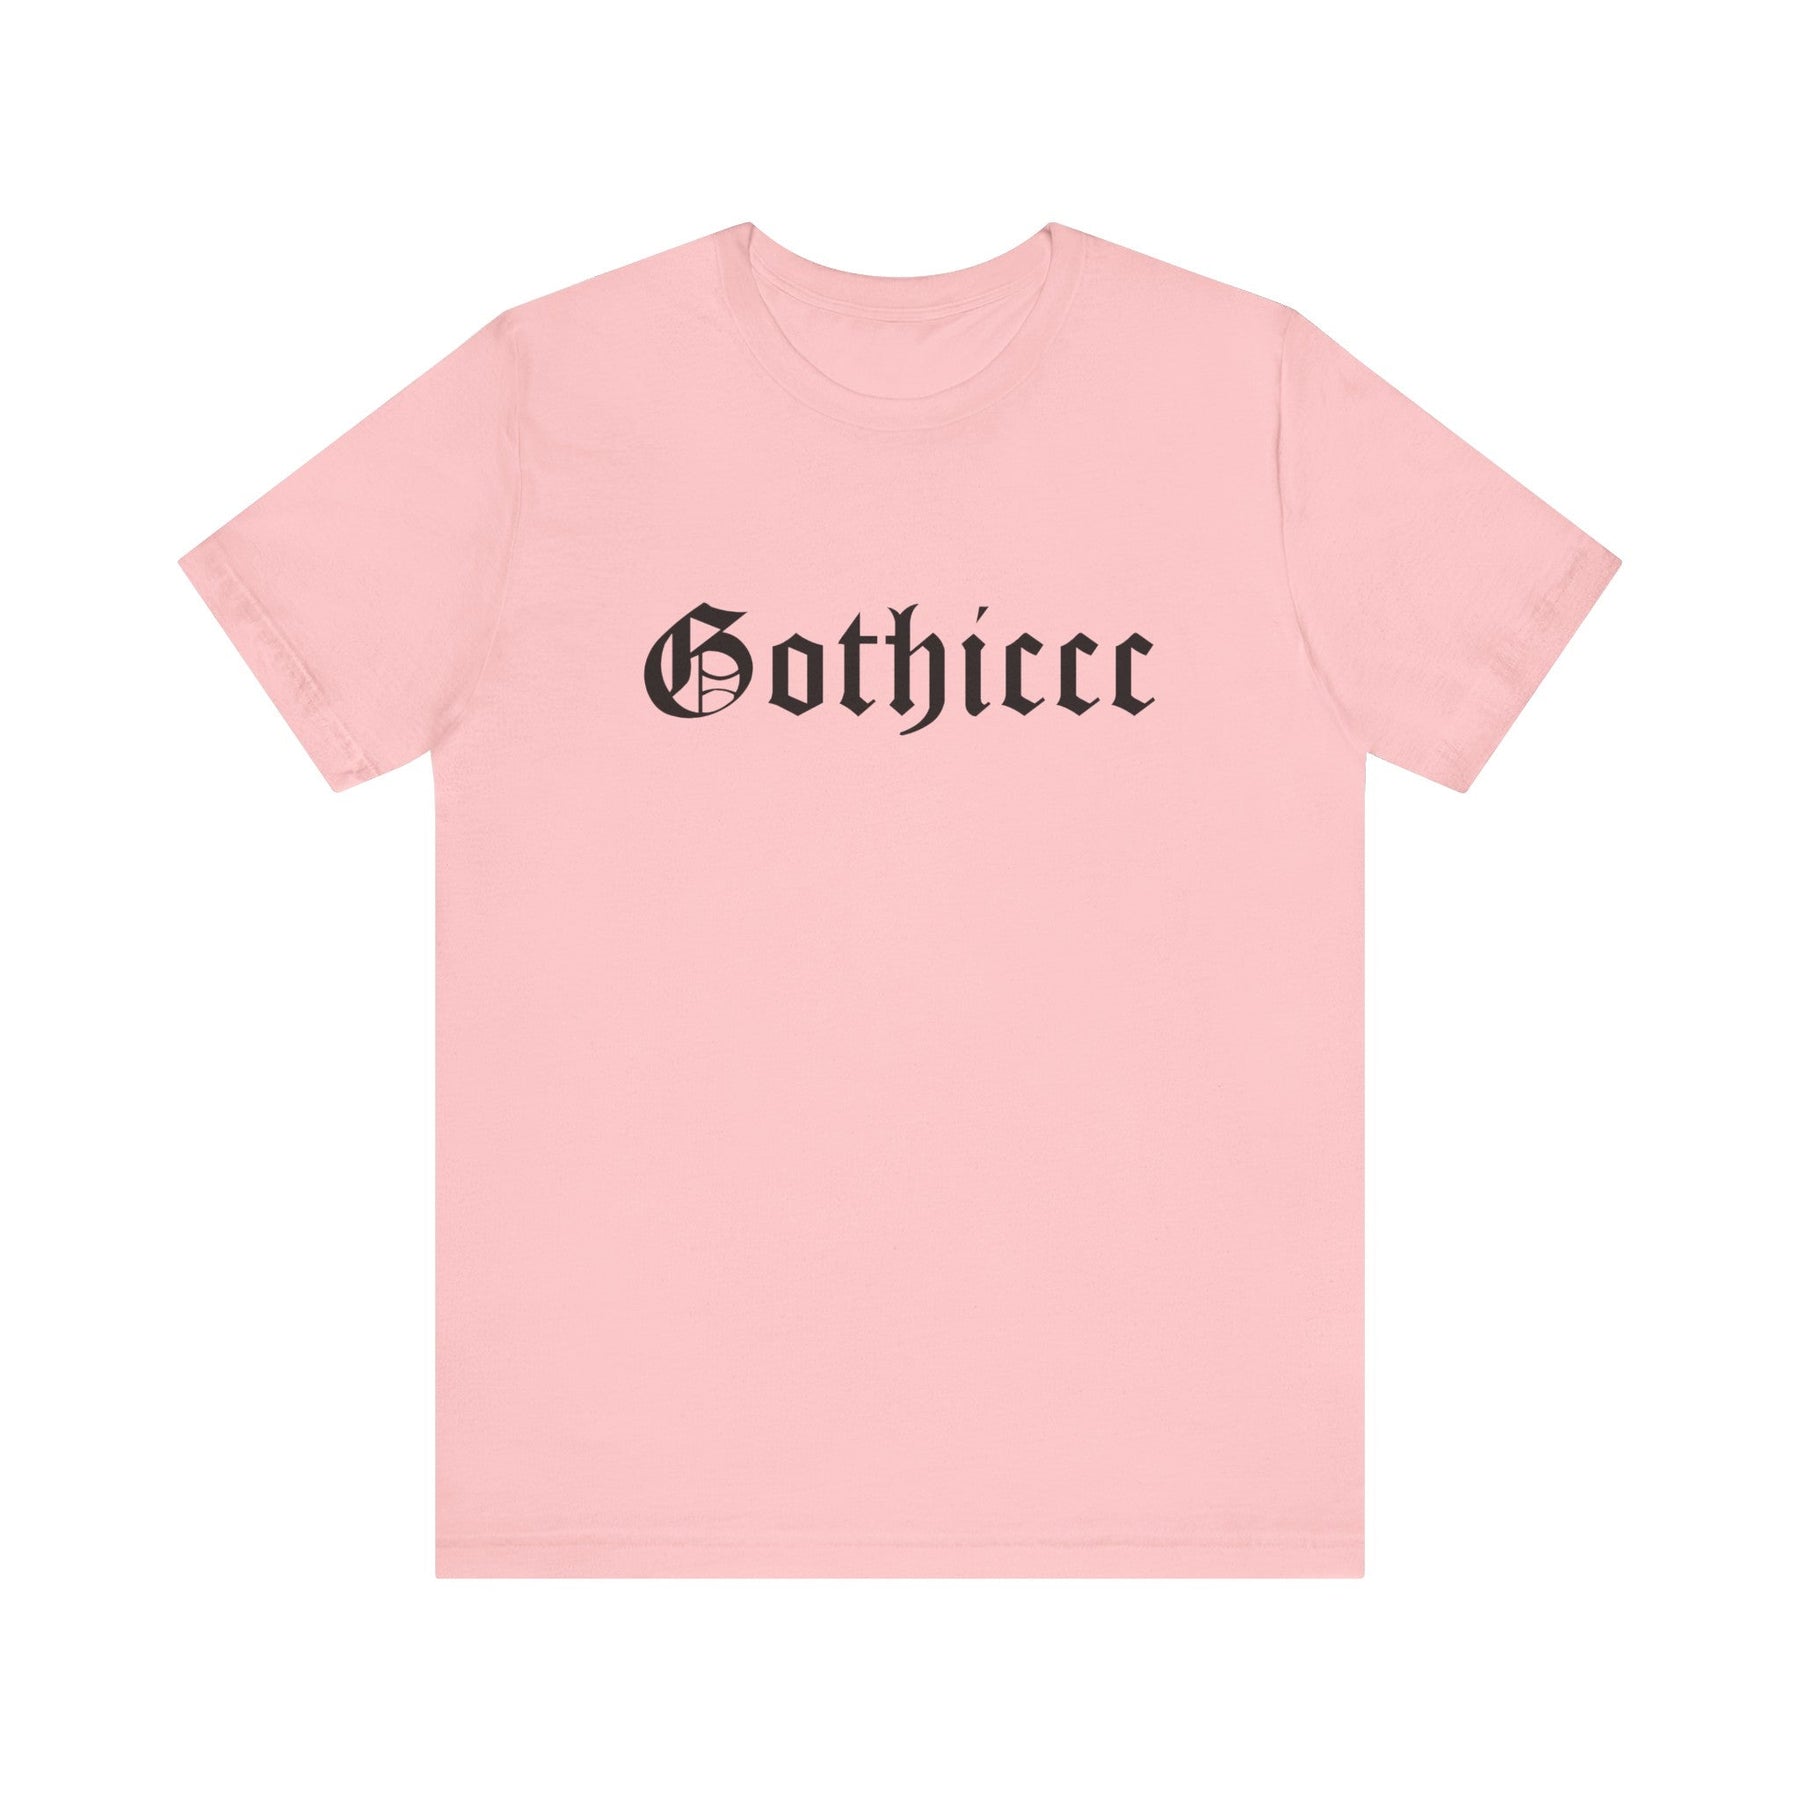 Gothiccc Large Font T - Shirt - Goth Cloth Co.T - Shirt20810110131935686245